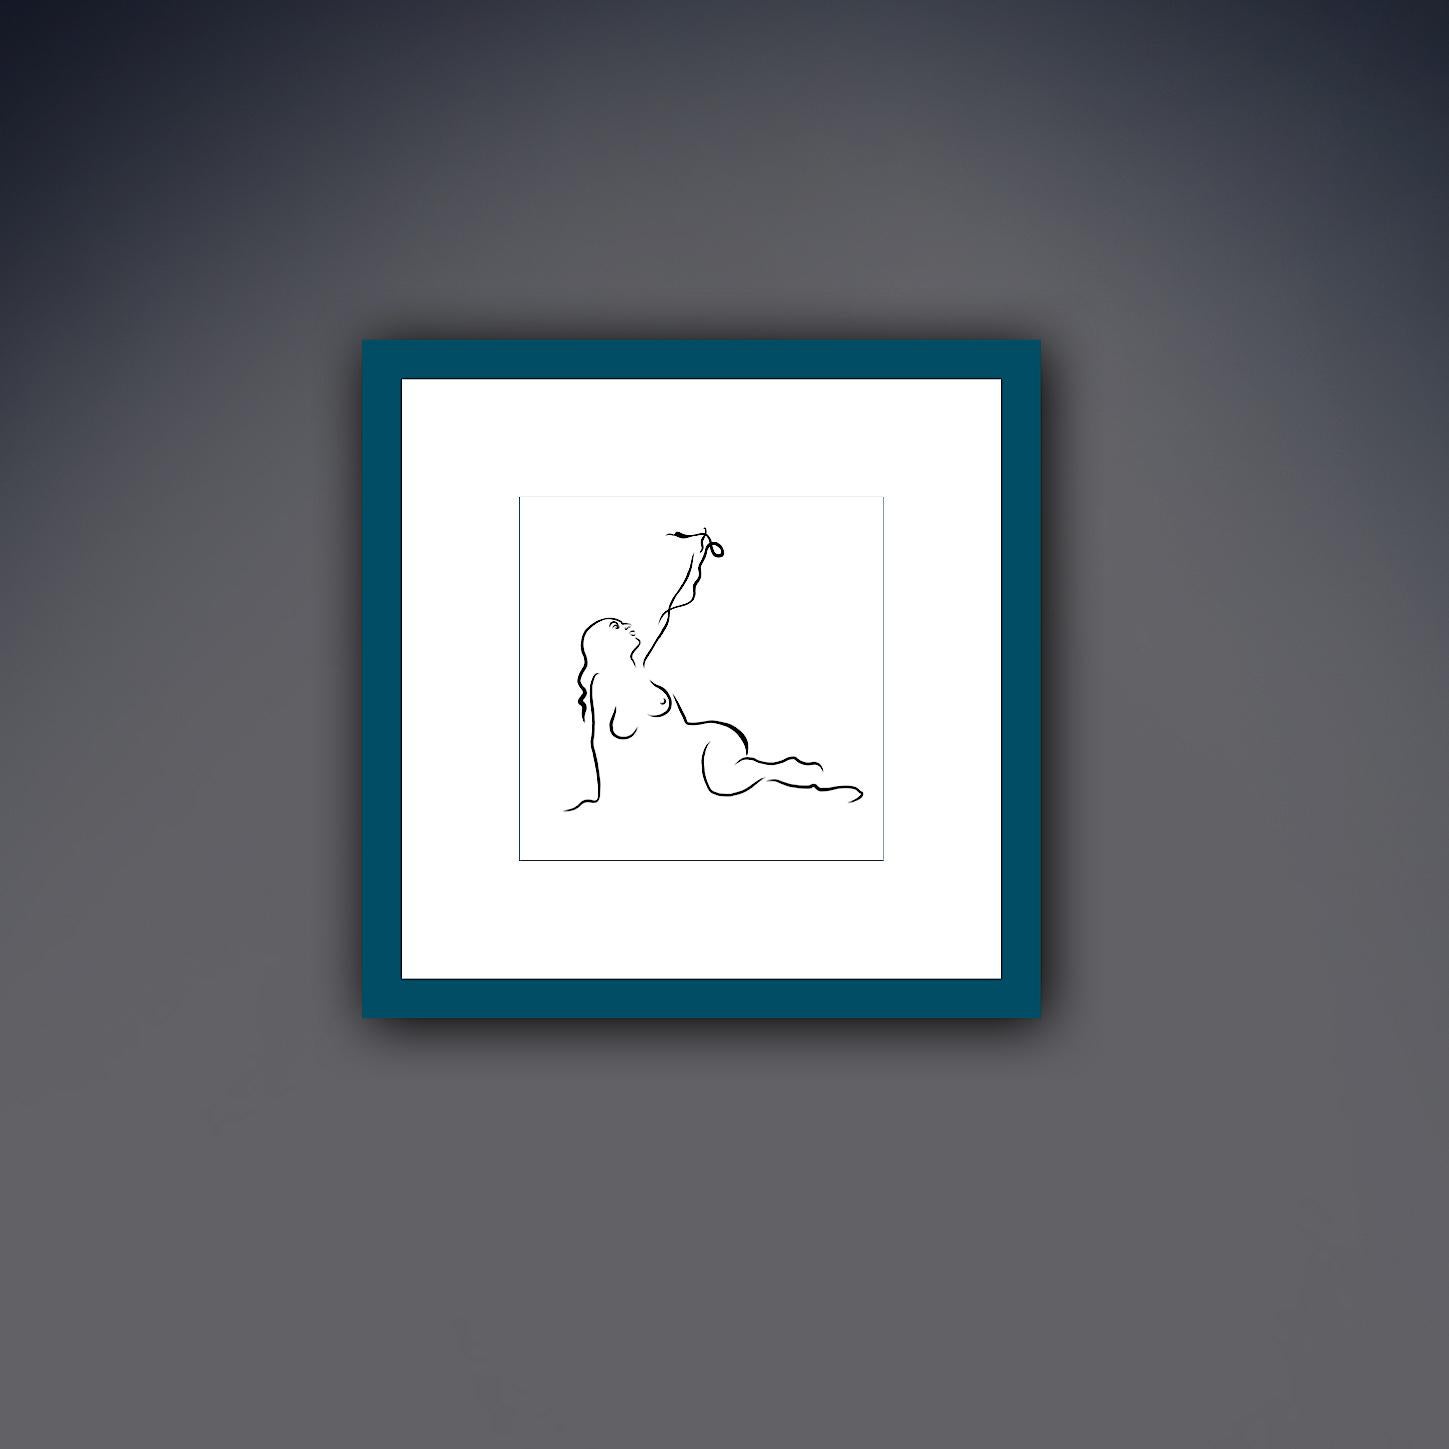 Haiku #6, 1/50 - Digital Vector B&W Drawing Female Nude Woman Figure with Snake - Contemporary Print by Michael Binkley